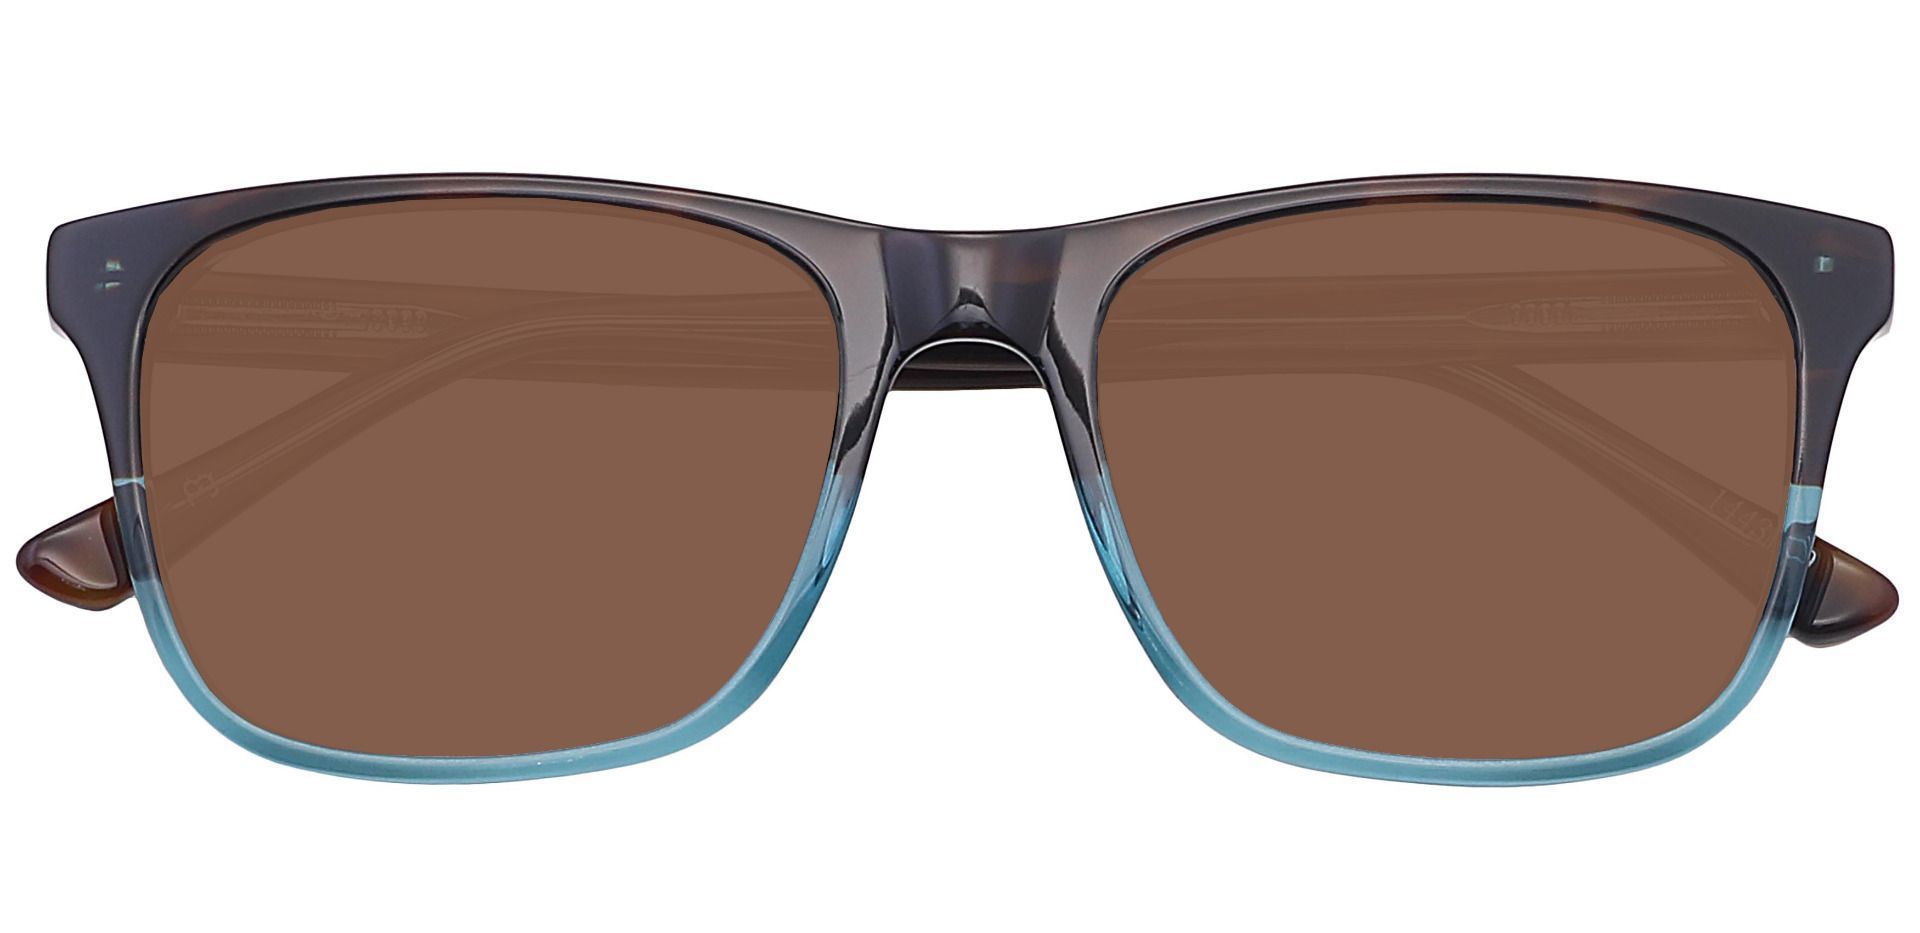 Cantina Square Progressive Sunglasses - Multi Color Frame With Brown Lenses